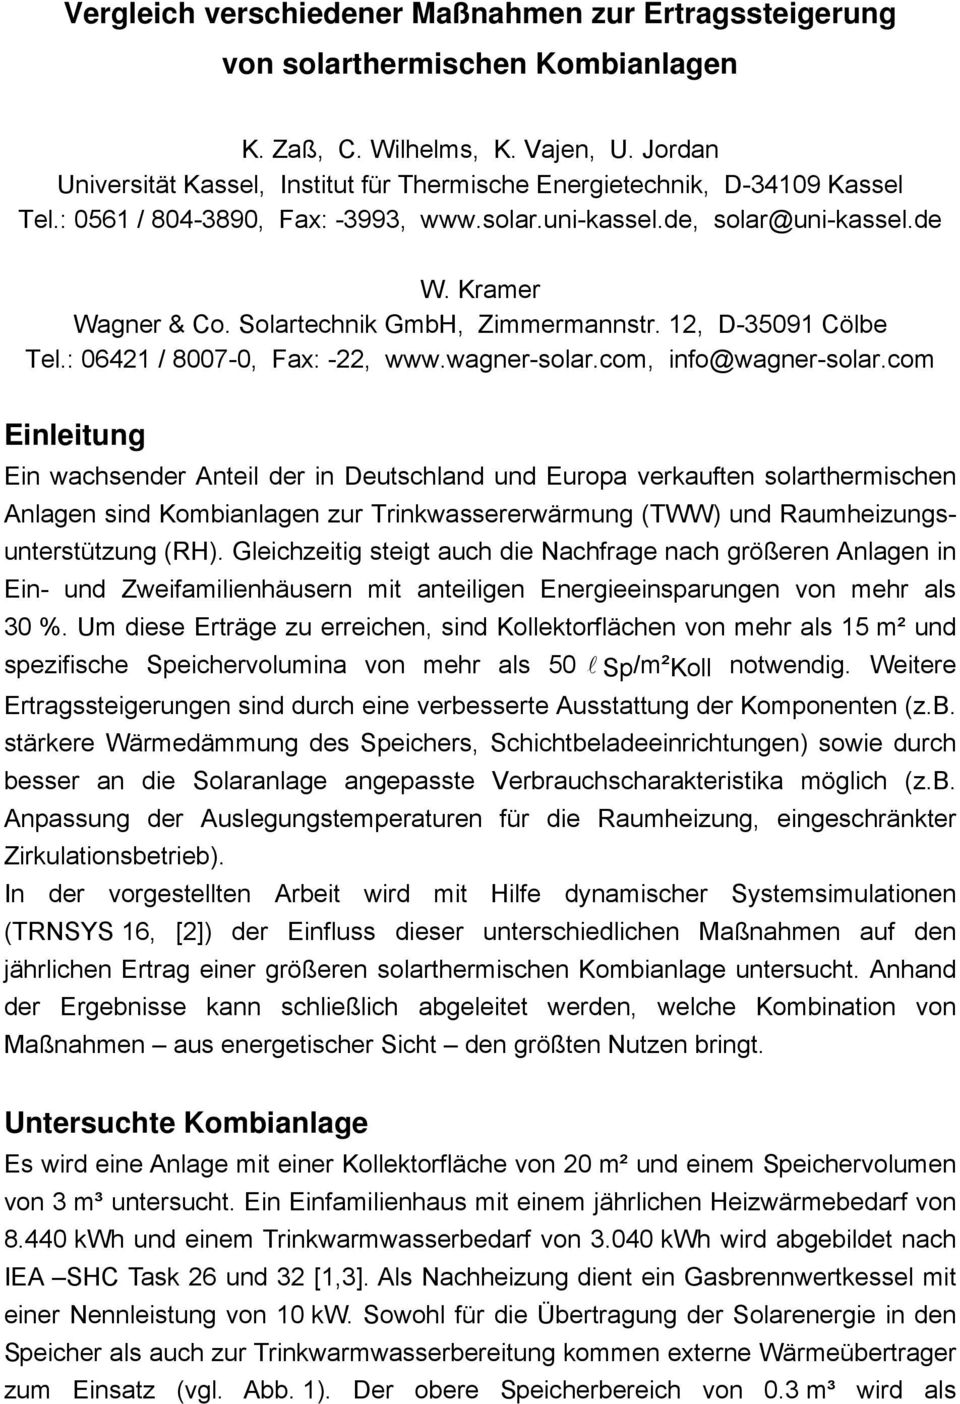 Solartechnik GmbH, Zimmermannstr. 12, D-35091 Cölbe Tel.: 06421 / 8007-0, Fax: -22, www.wagner-solar.com, info@wagner-solar.